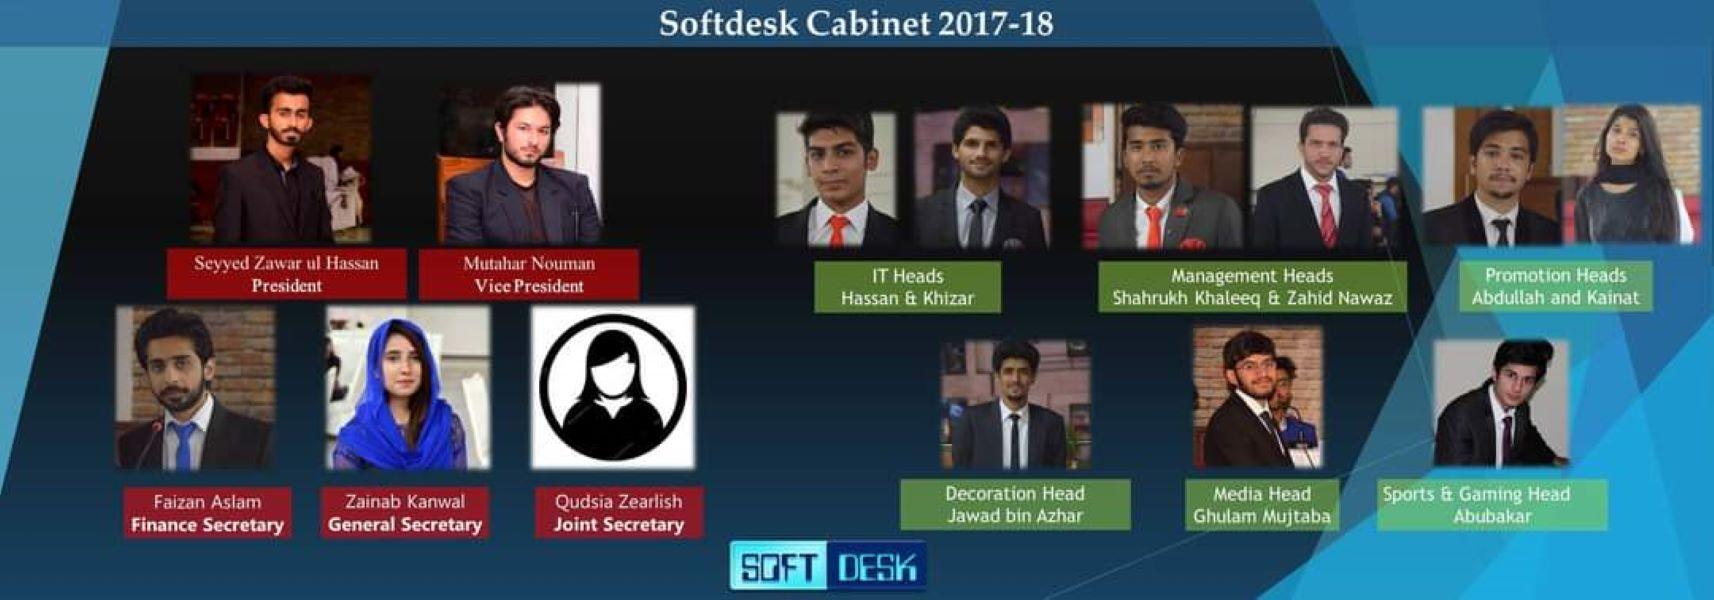 Cabinet 2017-18